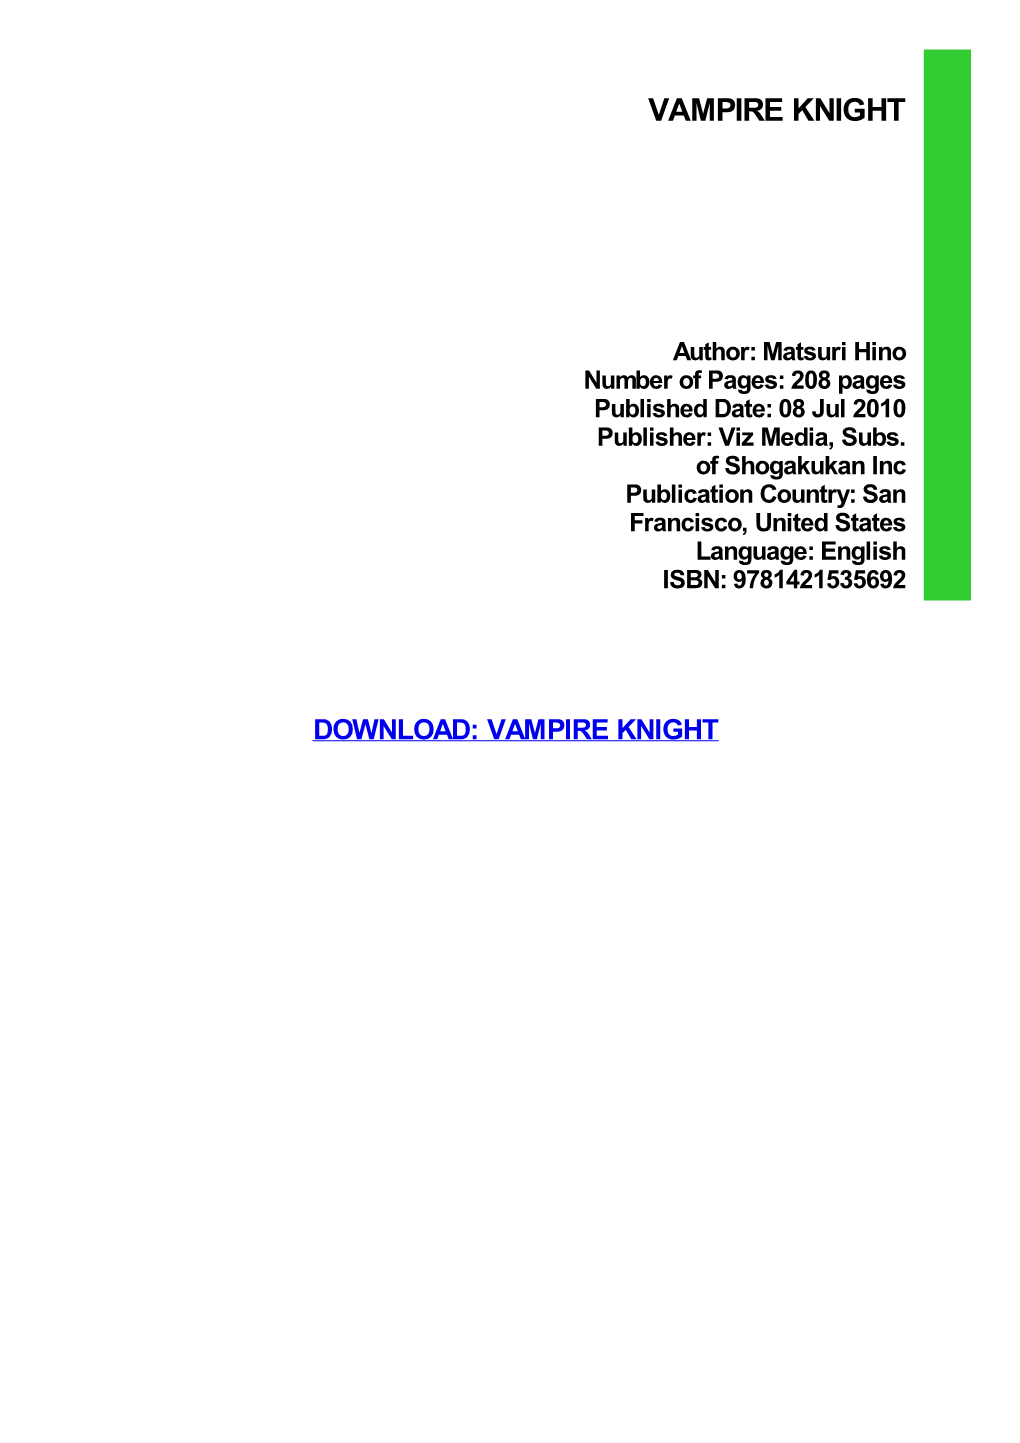 Vampire Knight Download Free